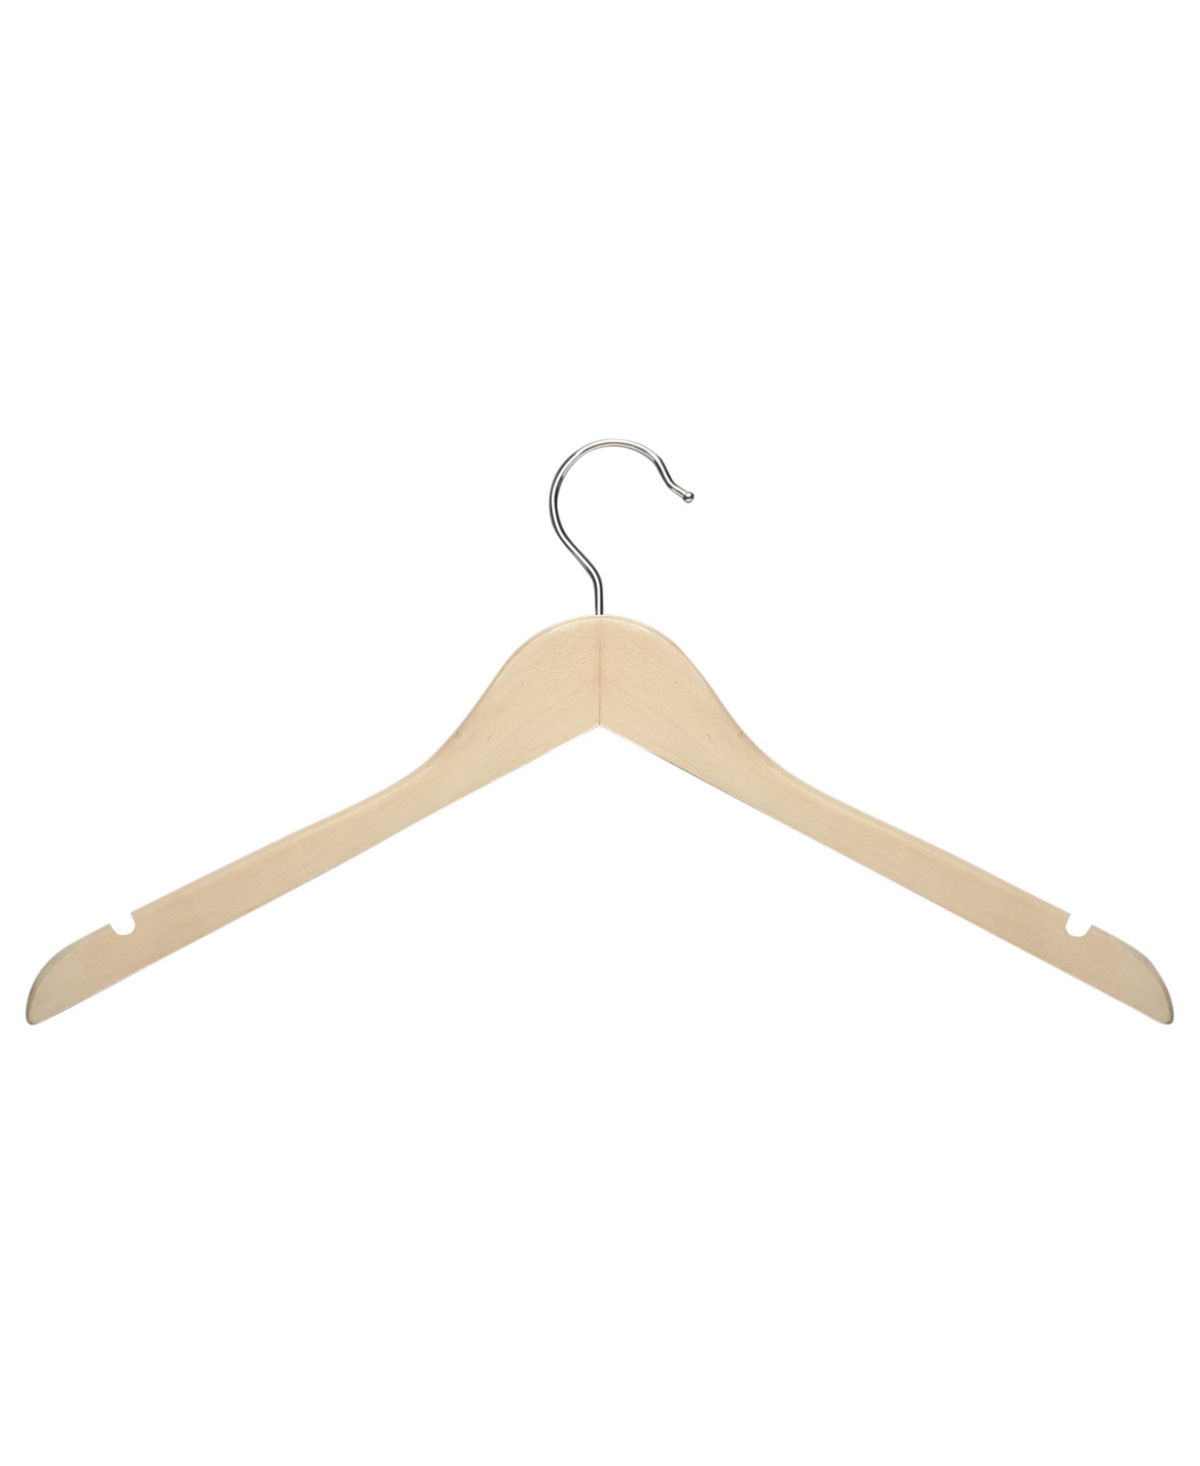 Maple Wood Shirt Hangers, Set of 20 - Beige